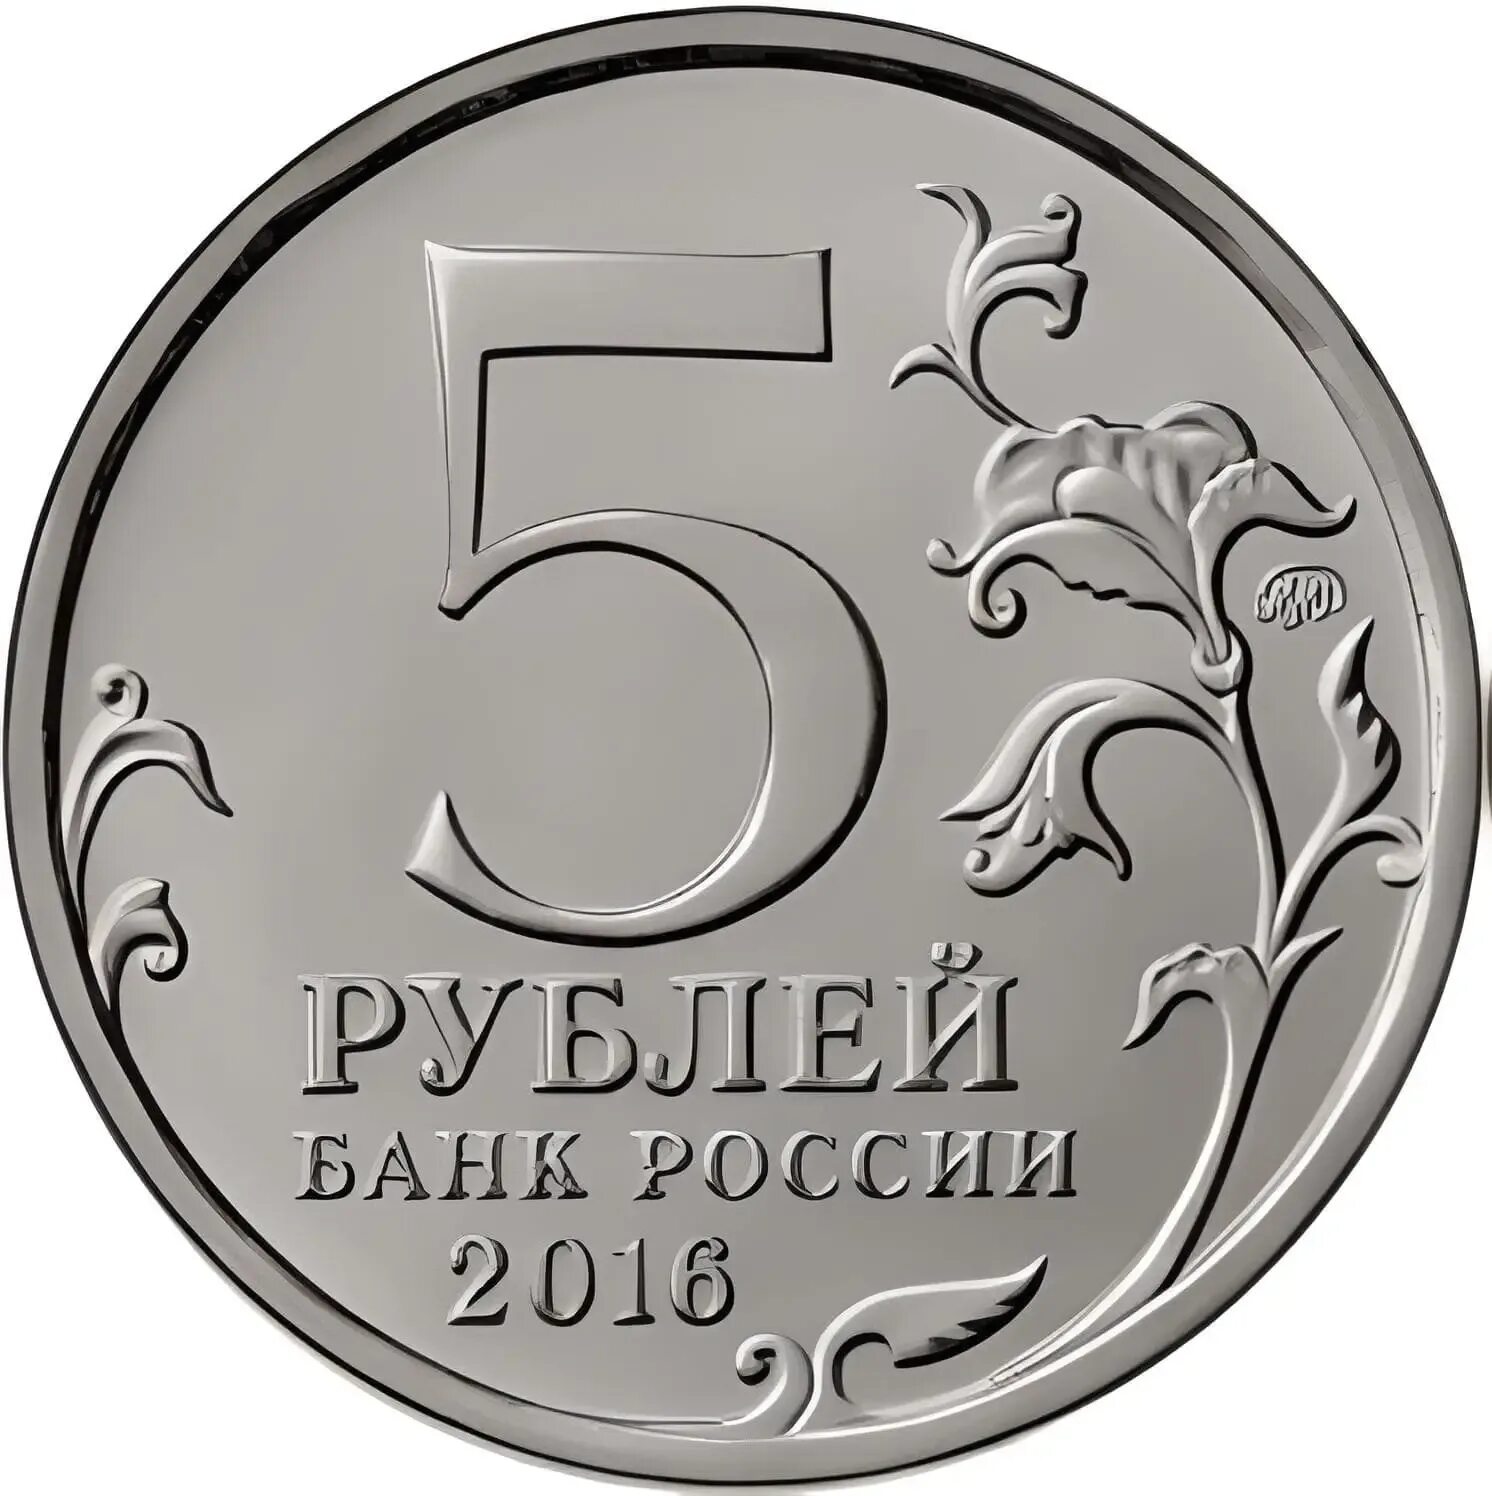 Монета 5 рублей. Изображение 5 рублей. Монета 2 рубля на прозрачном фоне. Монета 5 руб для фотошопа. 5 рублей стороны